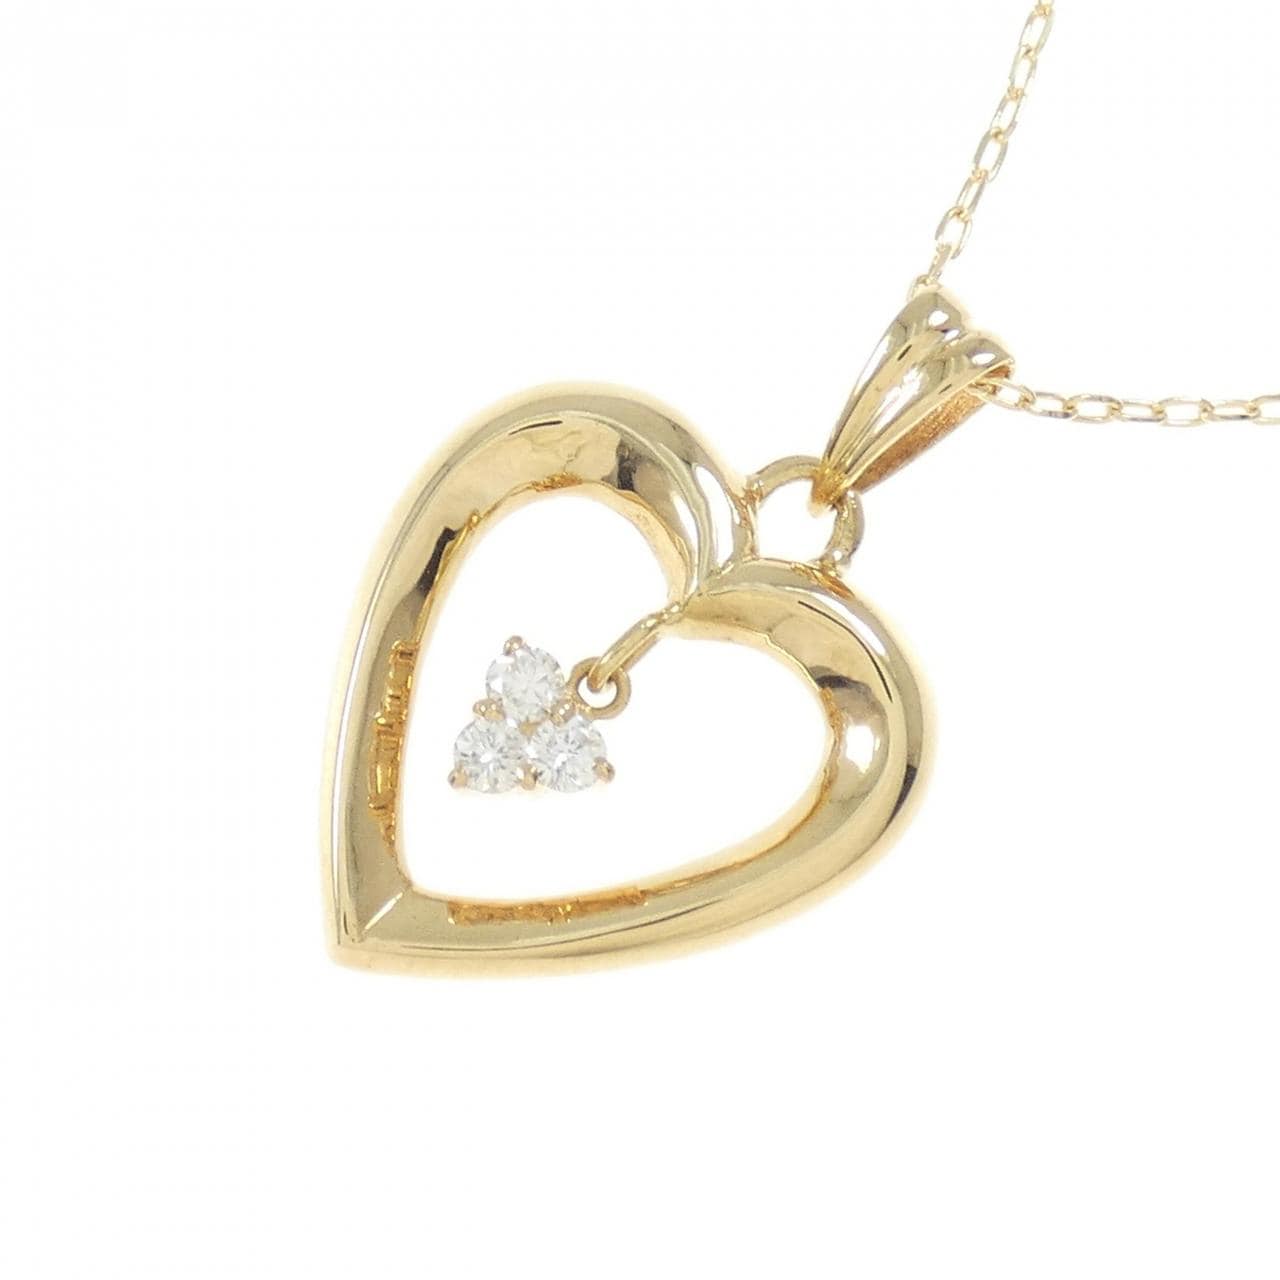 K18YG heart Diamond necklace 0.10CT